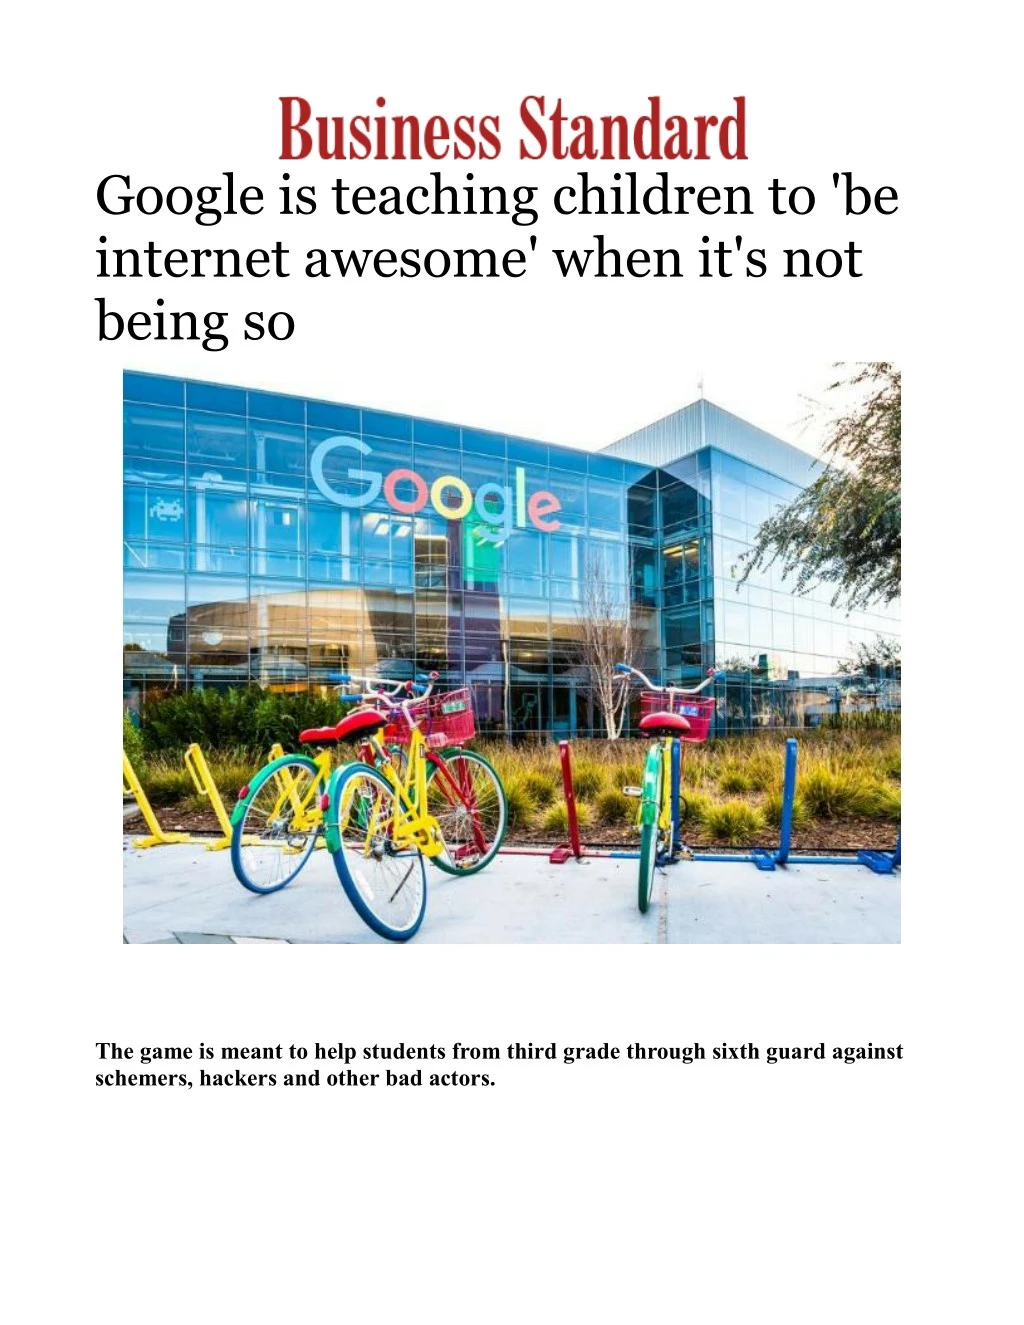 google is teaching children to be internet